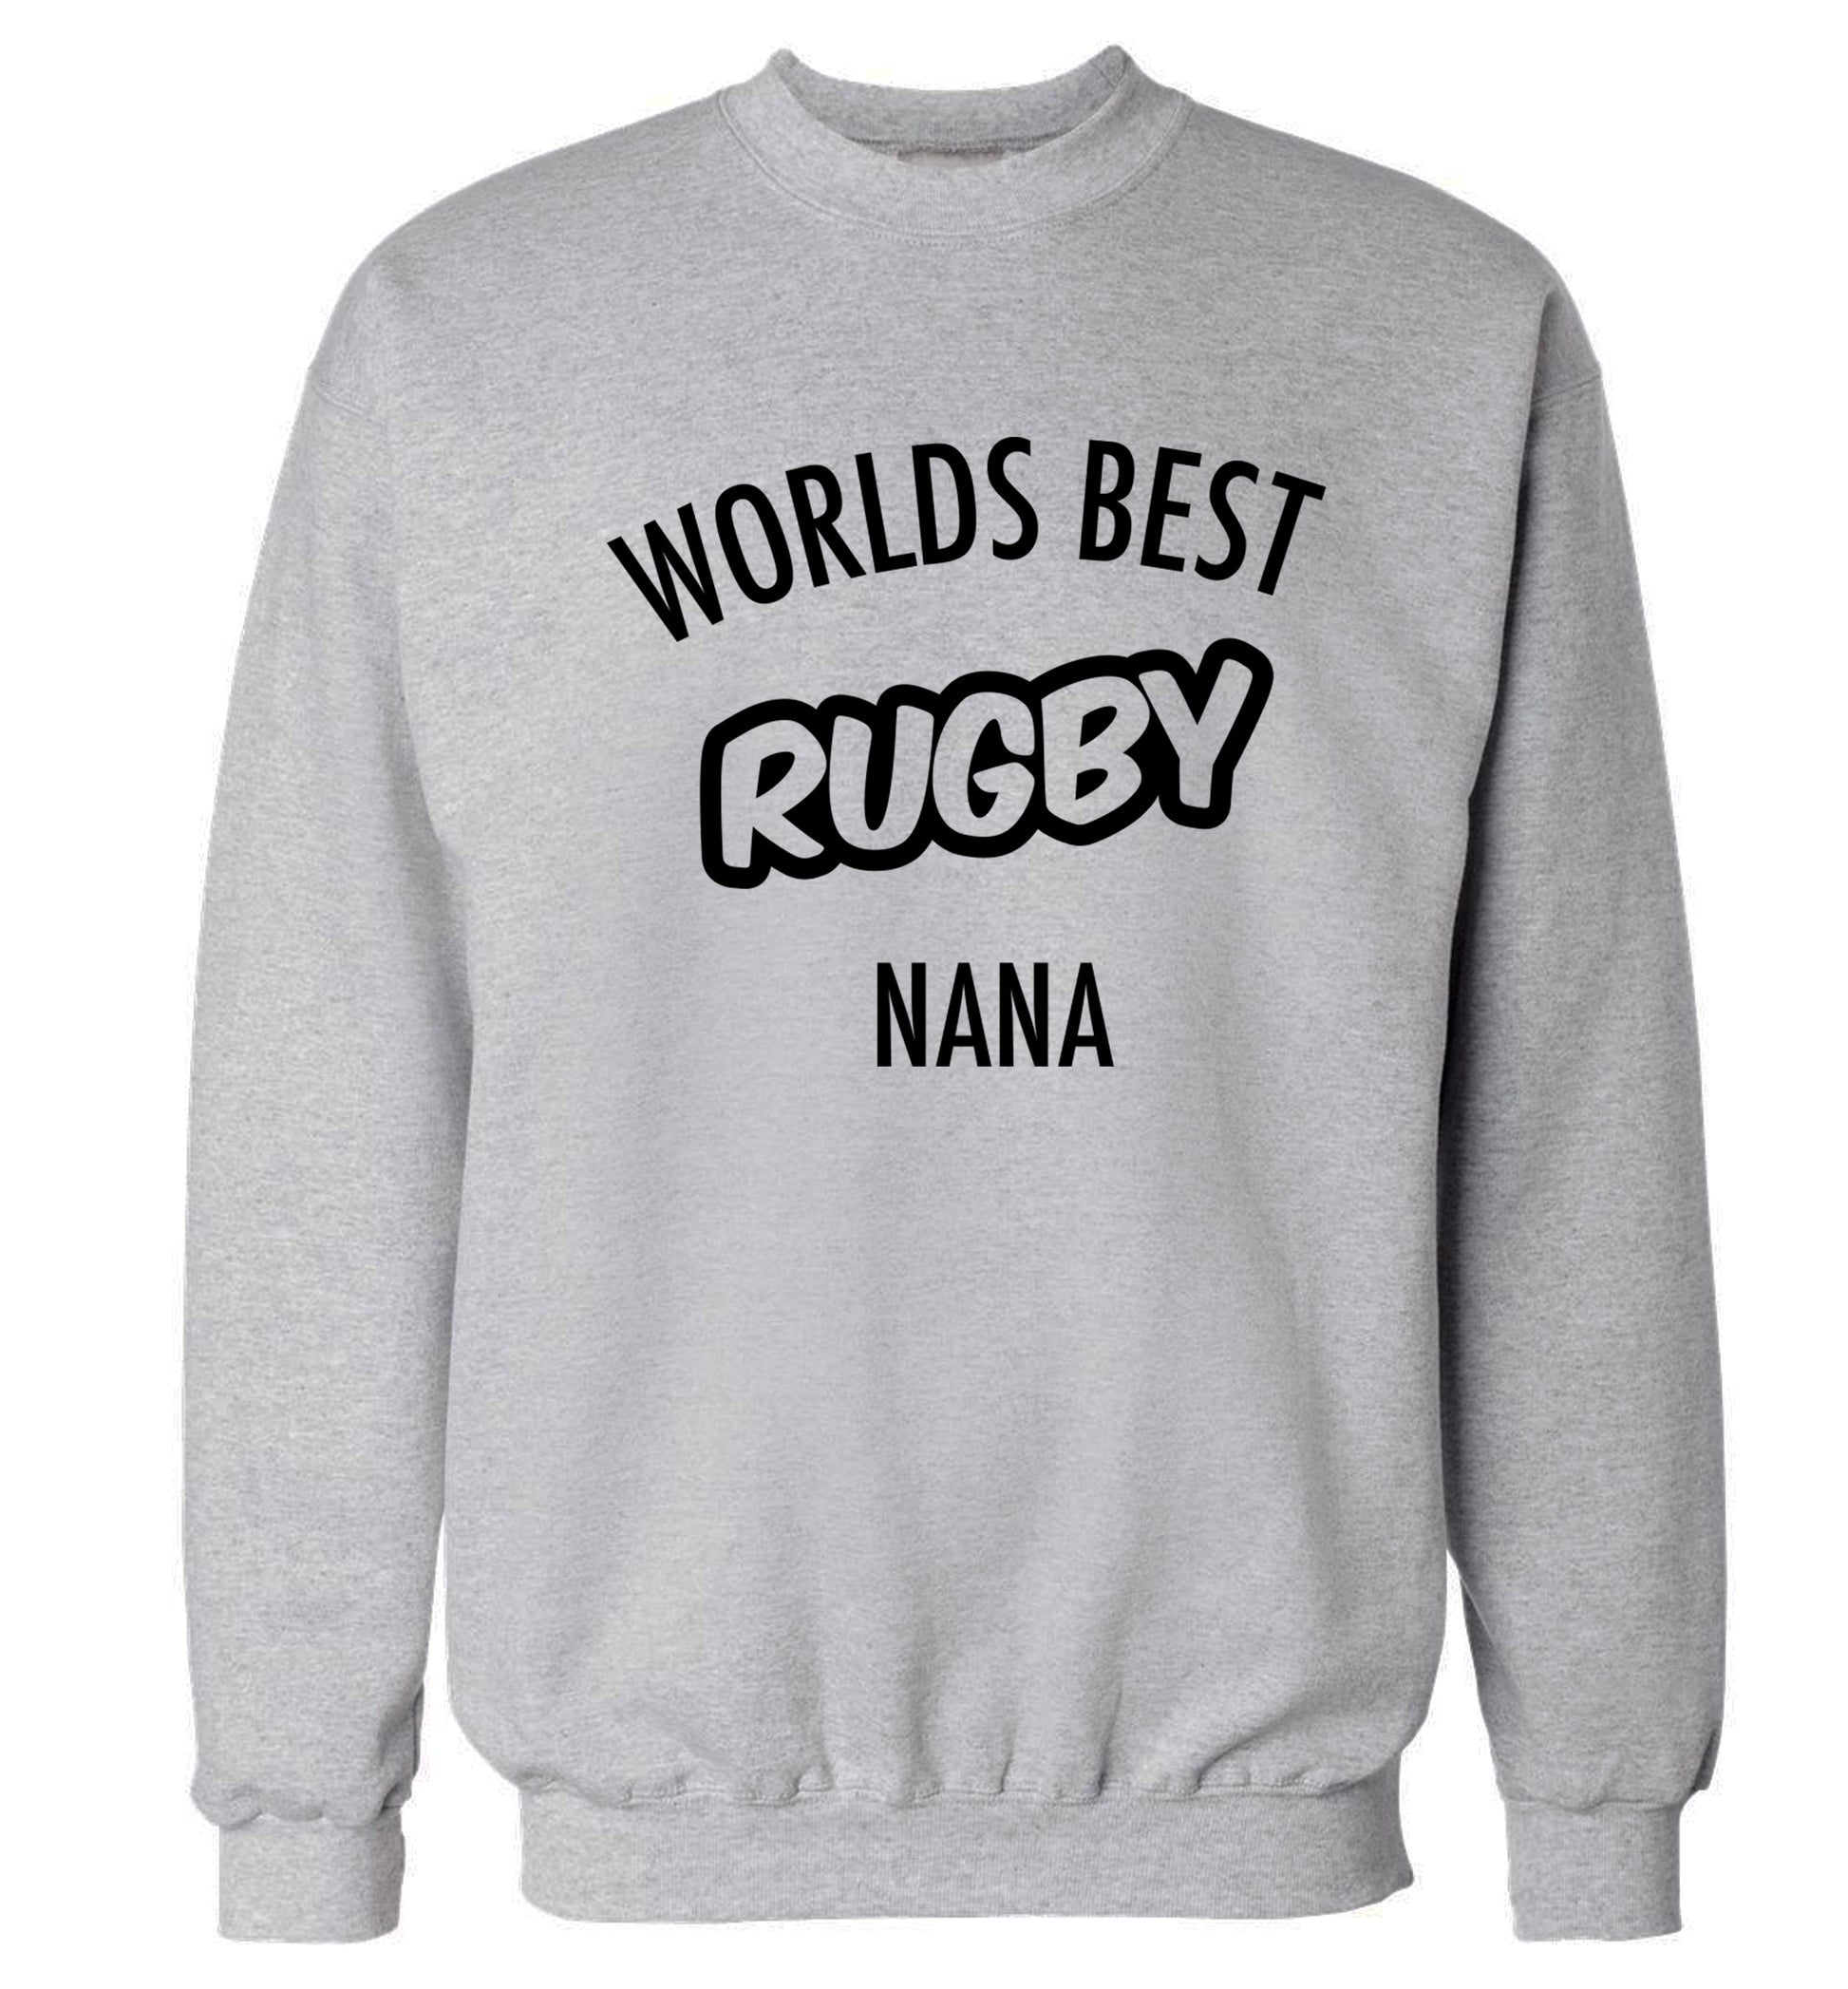 Worlds Best Rugby Grandma Adult's unisex grey Sweater 2XL